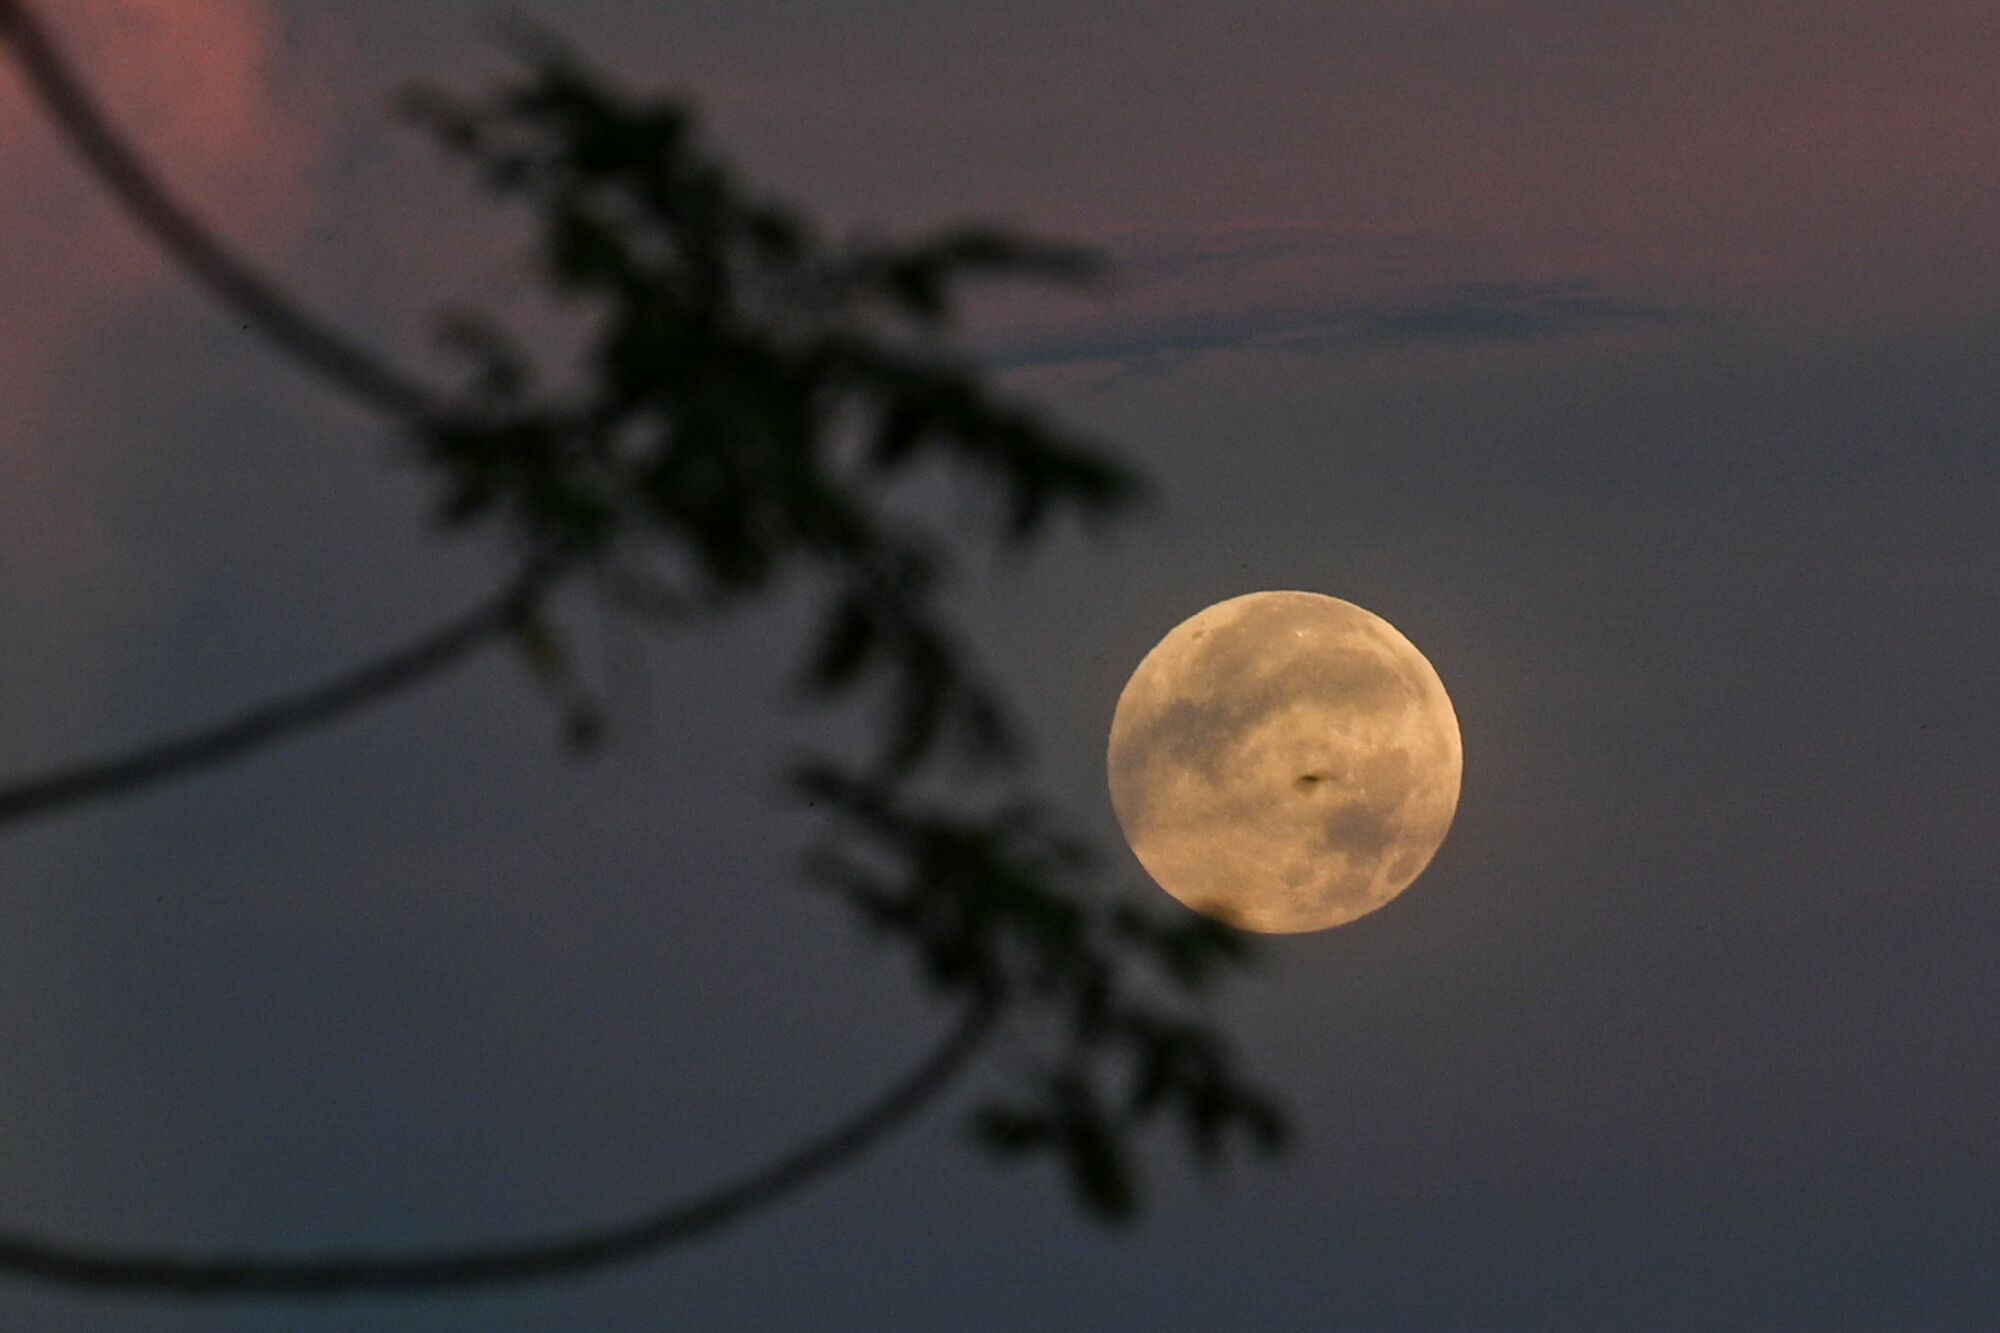 The full moon against a dusky sky behind a tree branch.